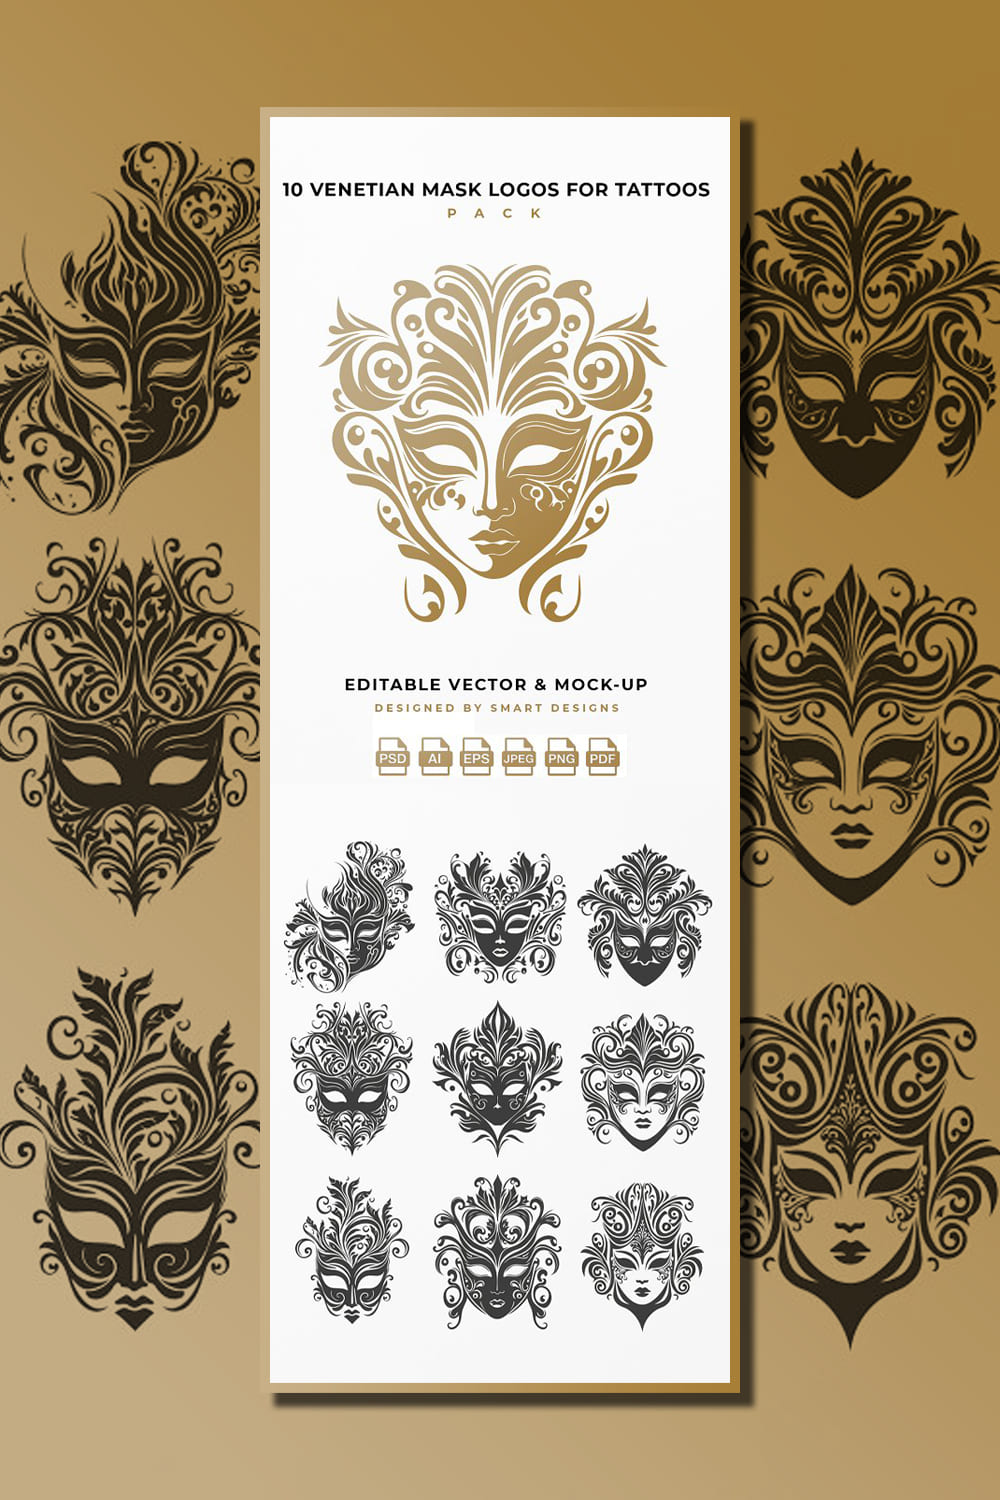 Venetian Mask Logos for Tattoos Pack pinterest image preview.